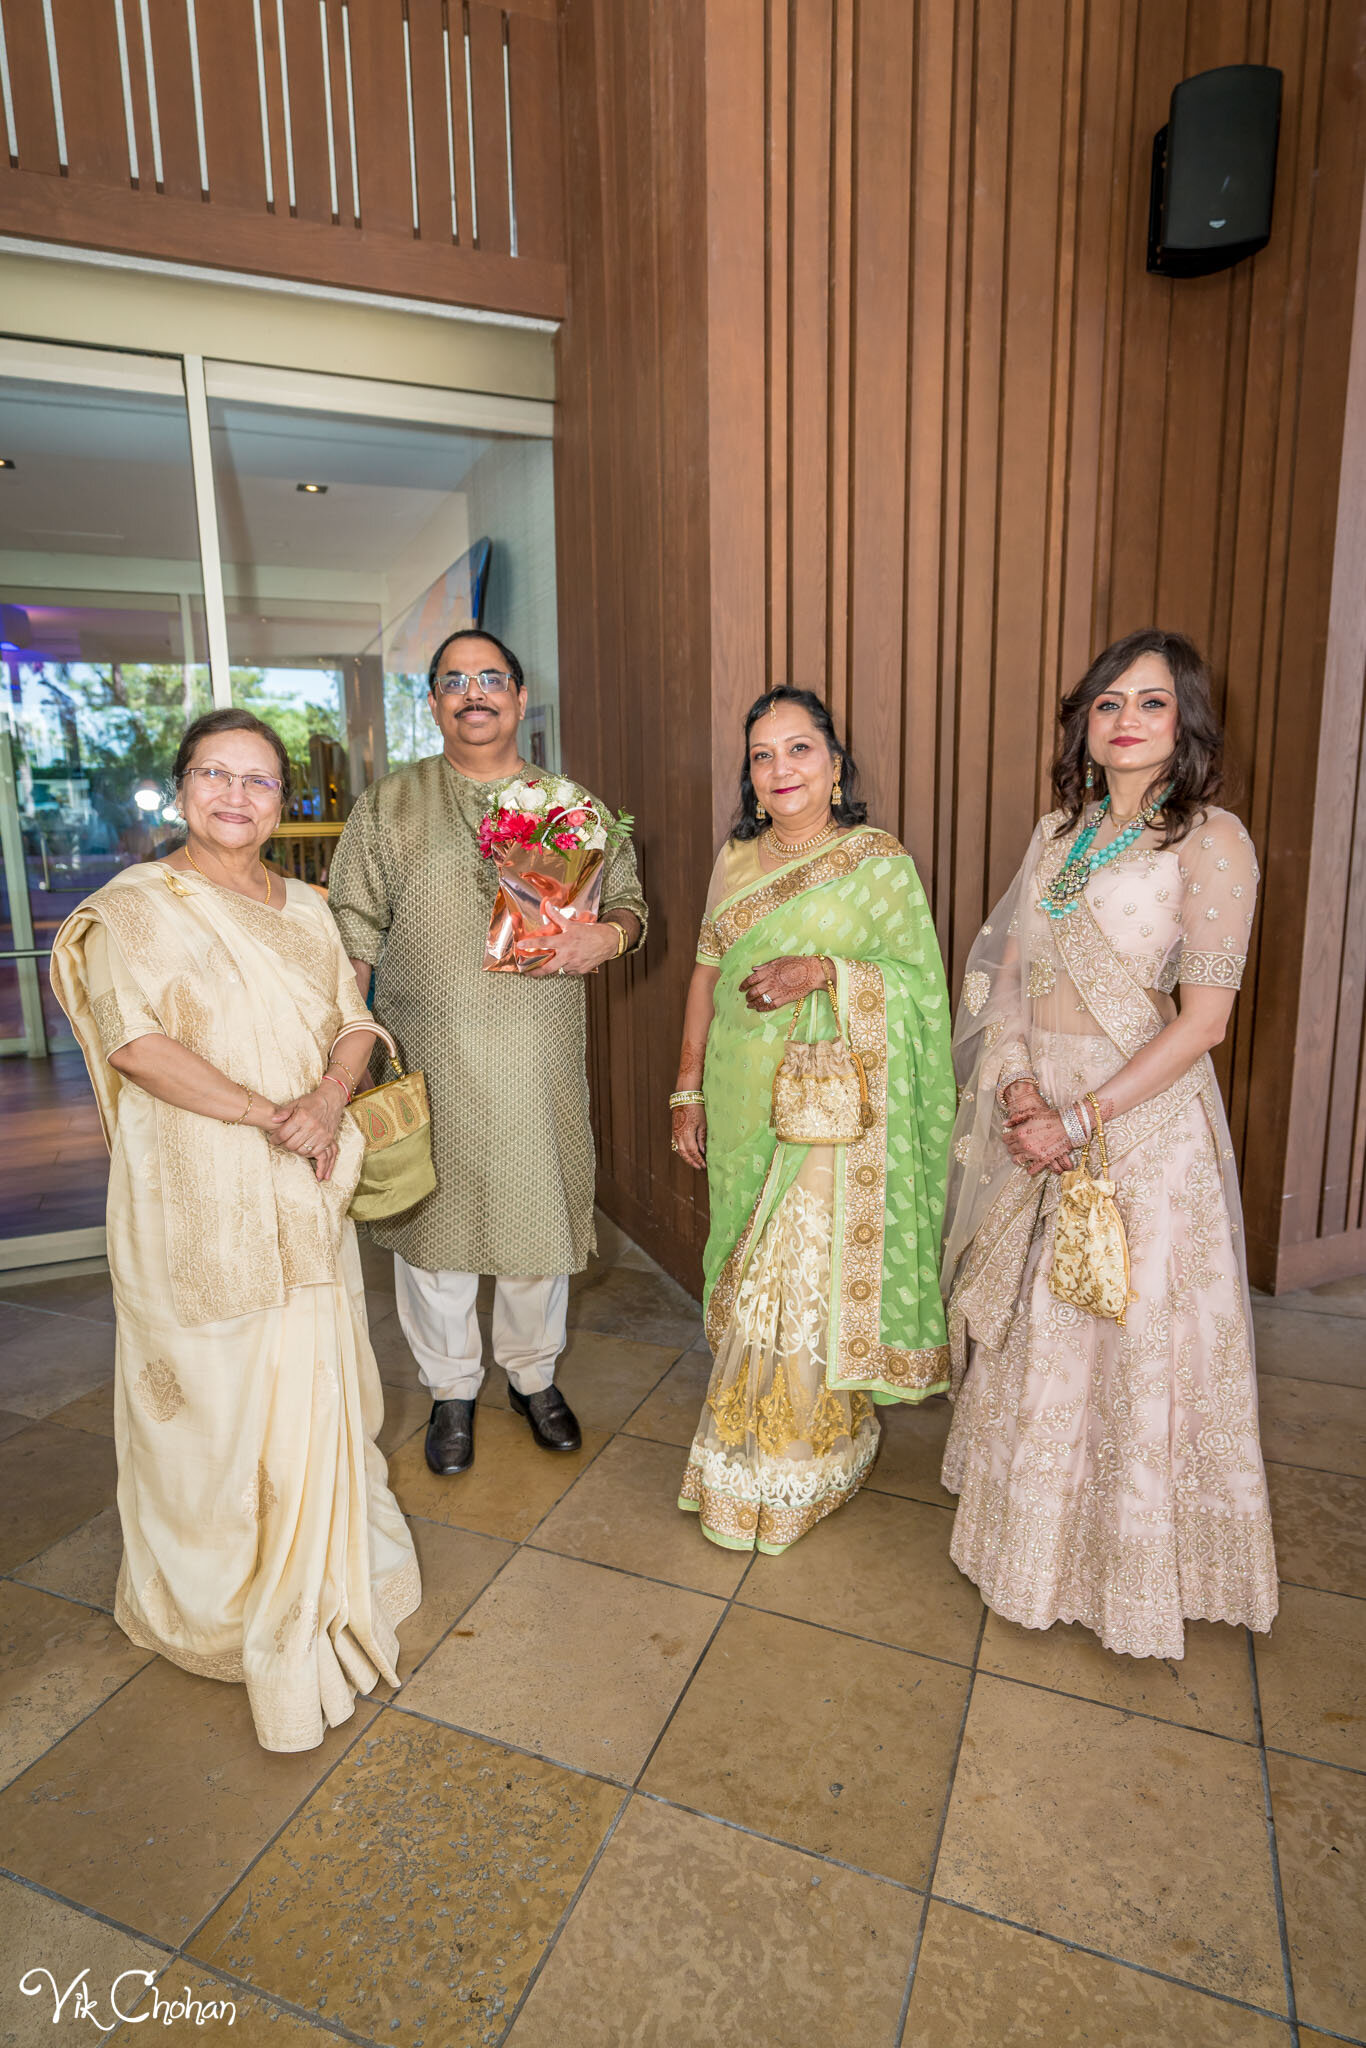 2021-07-30-Shaan-&-Megha-Wedding-Vik-Chohan-Photography-Photo-Booth-Social-Media-VCP-019.jpg